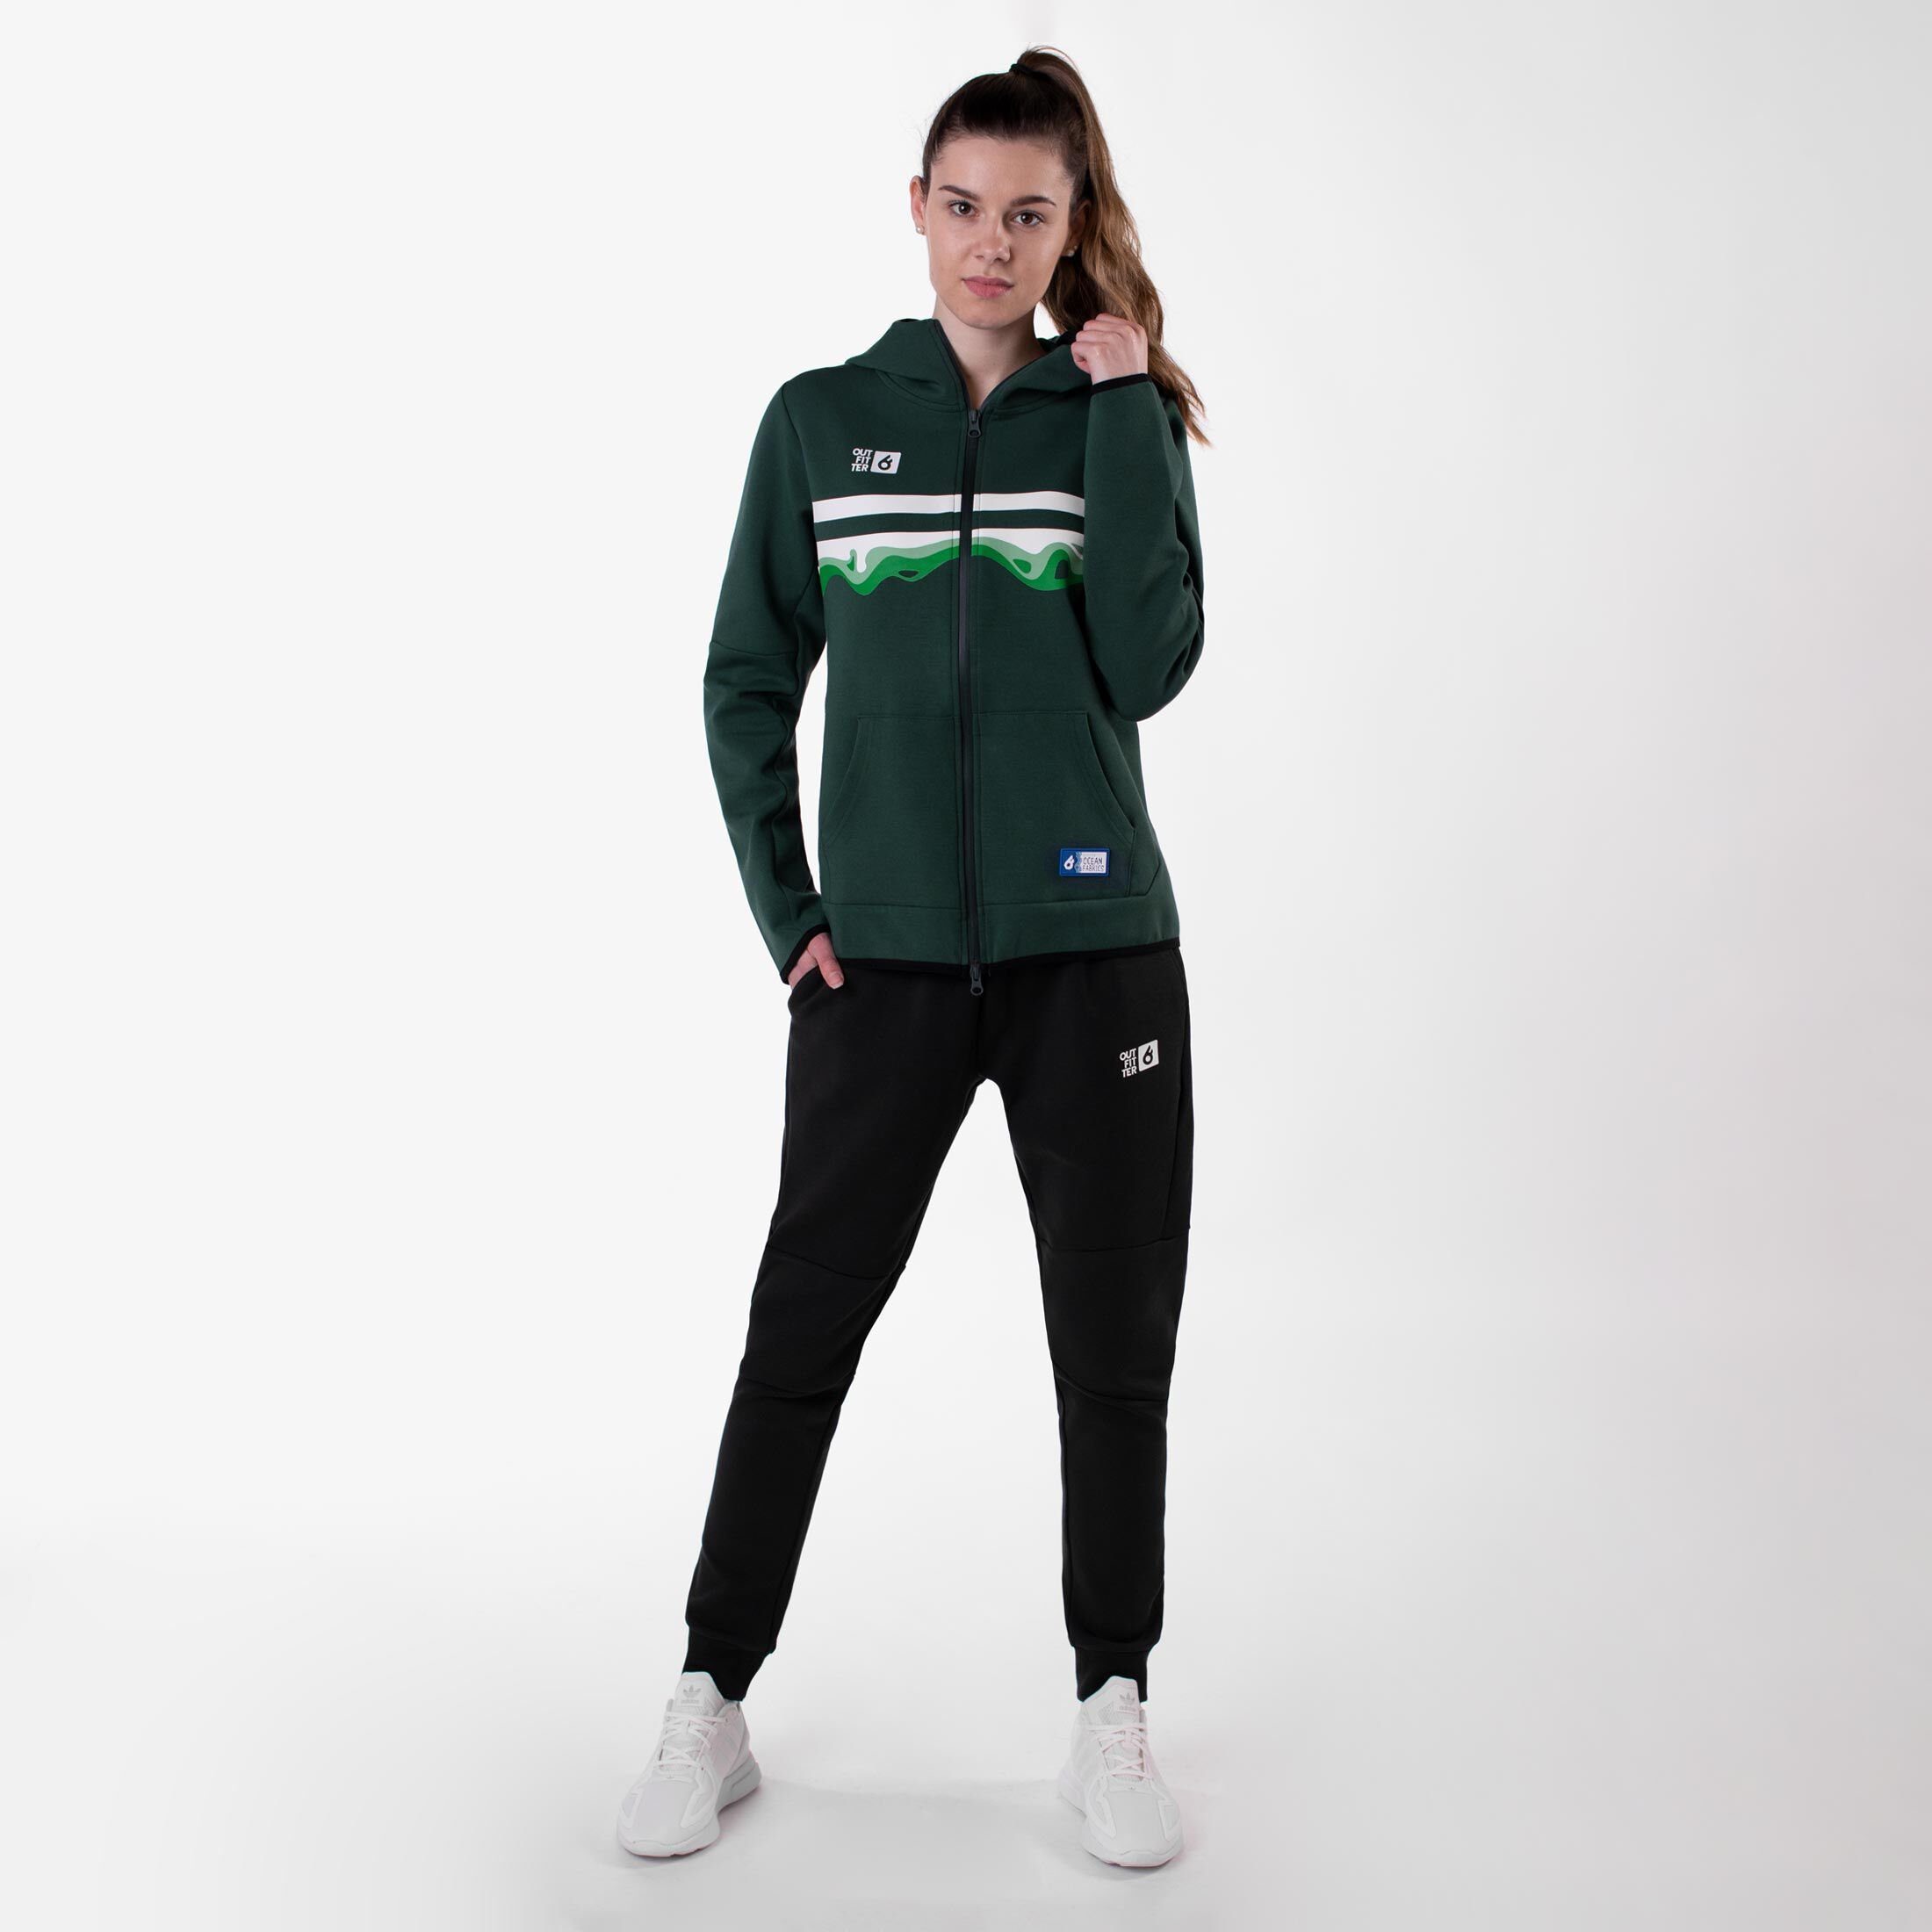 Outfitter Trainingsanzug Ocean Fabrics Jogginganzug Damen grün / schwarz